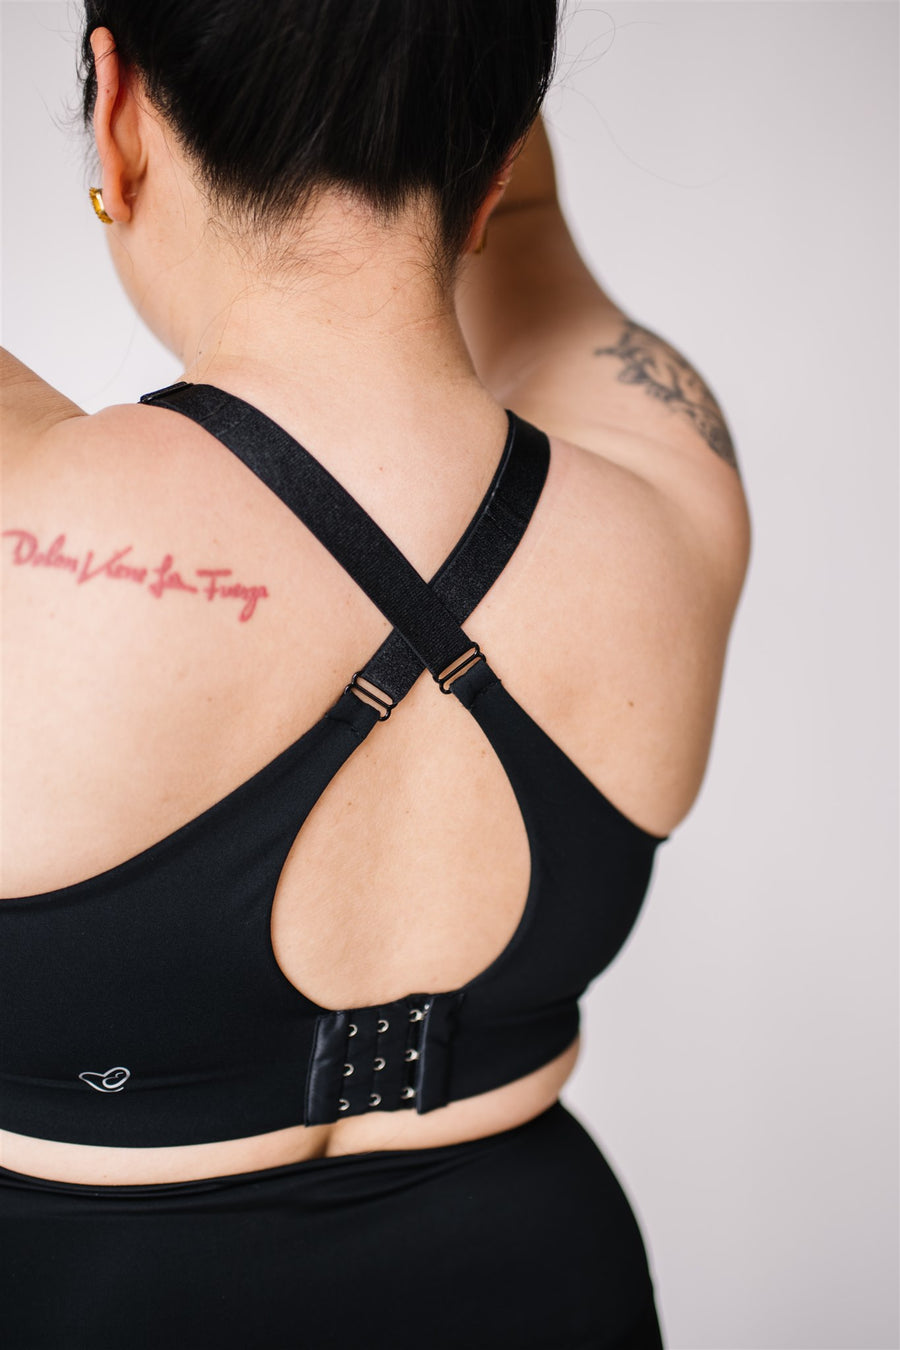 Woman wearing black nursing sports bra with front zip.